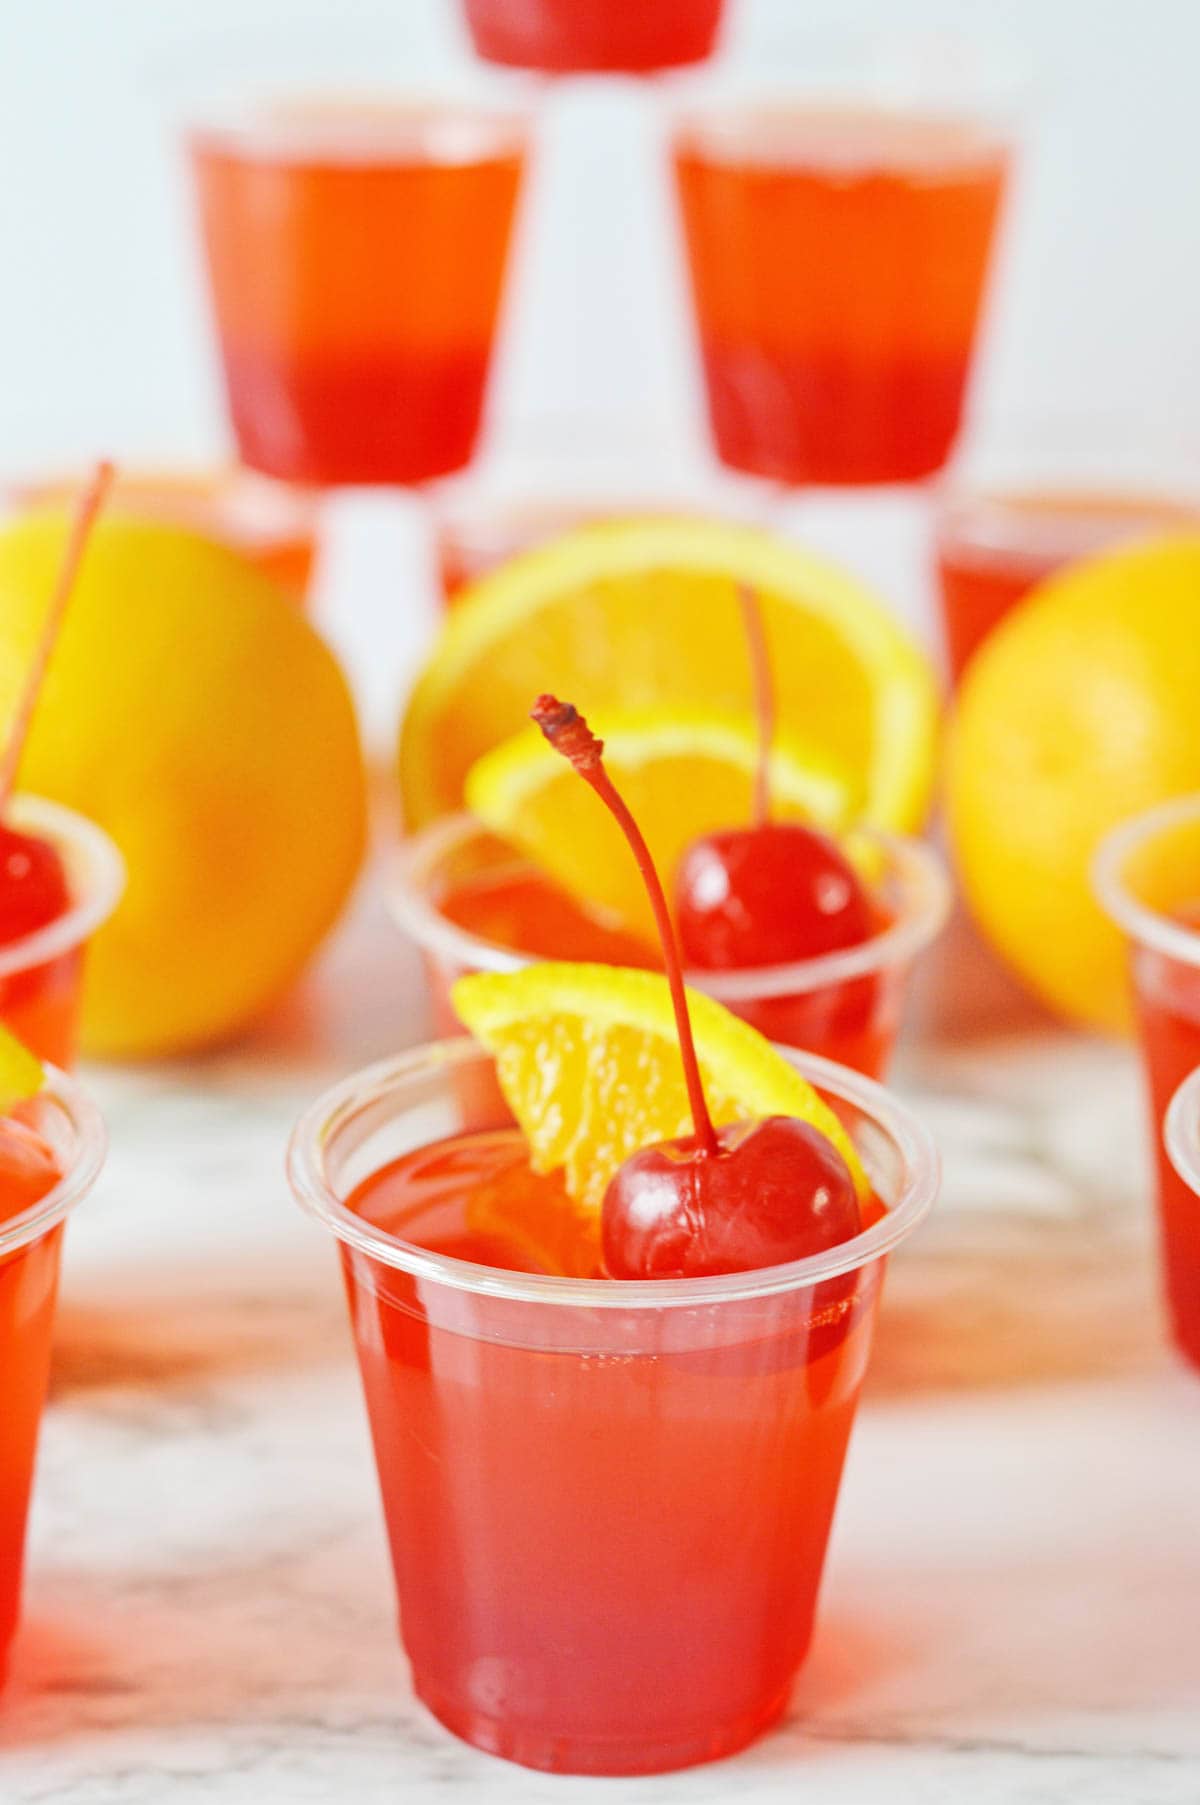 Jello shots with cherries and oranges